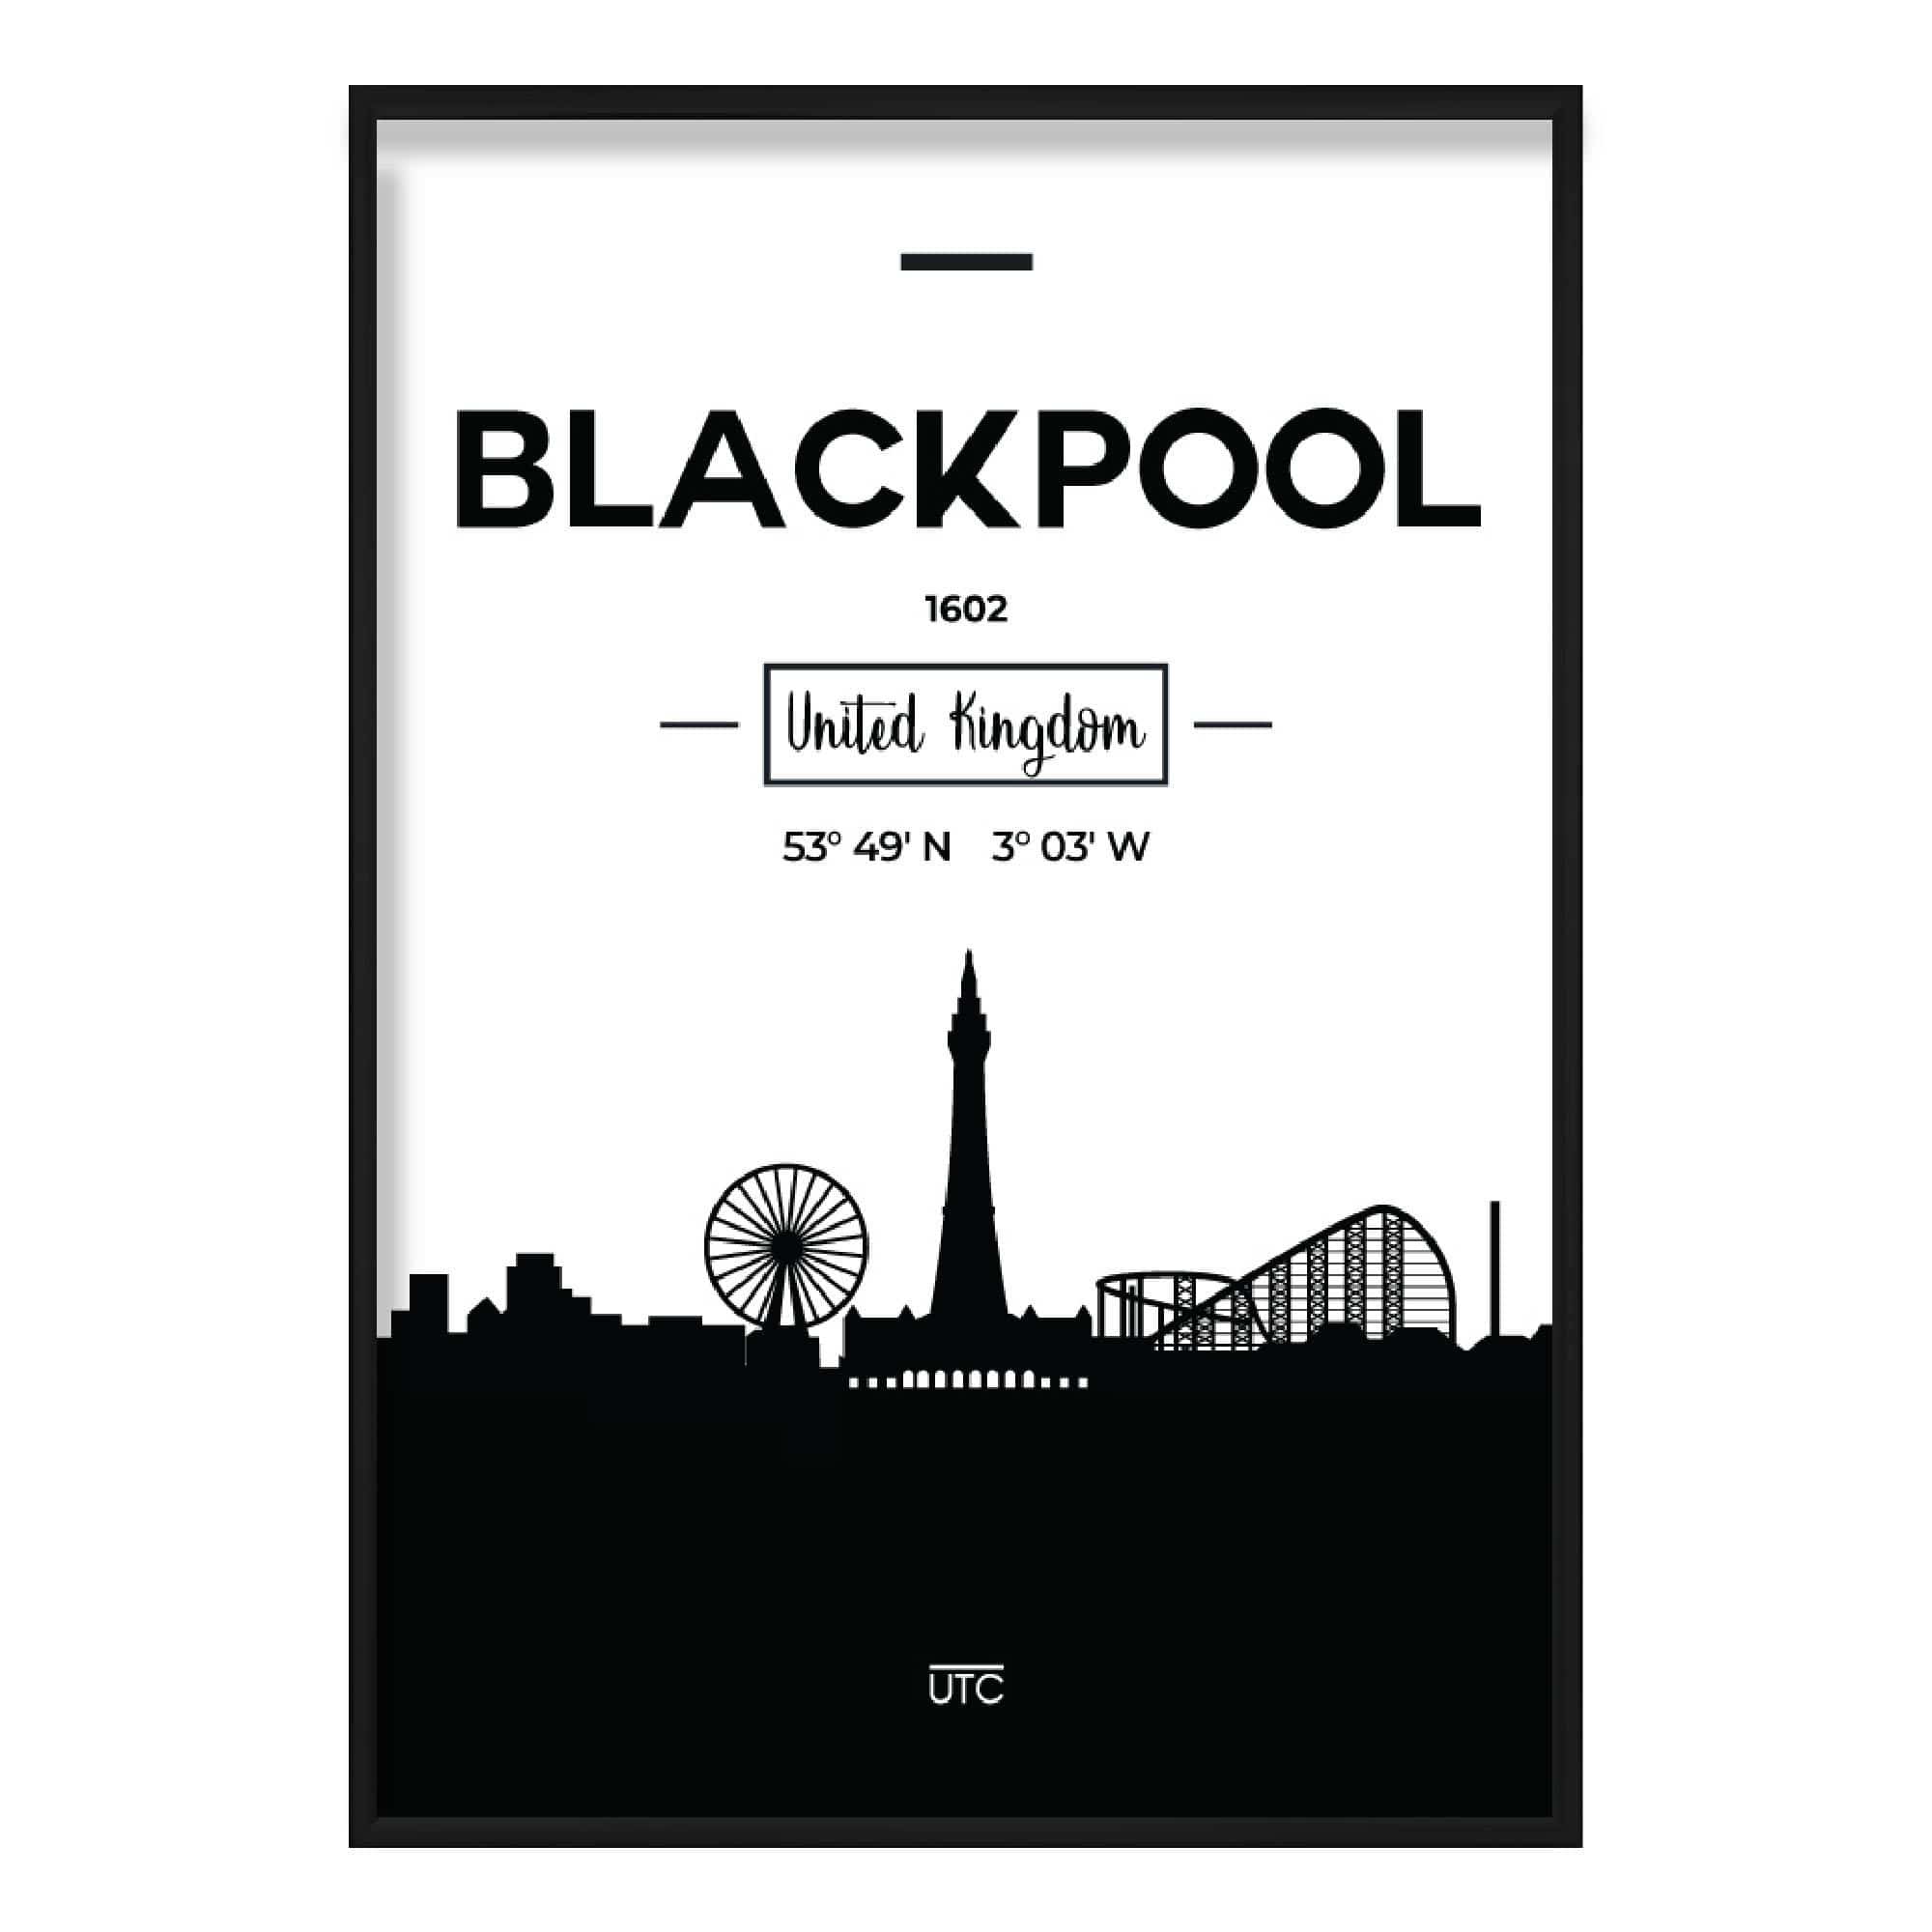 Blackpool City Skyline Cityscape Print